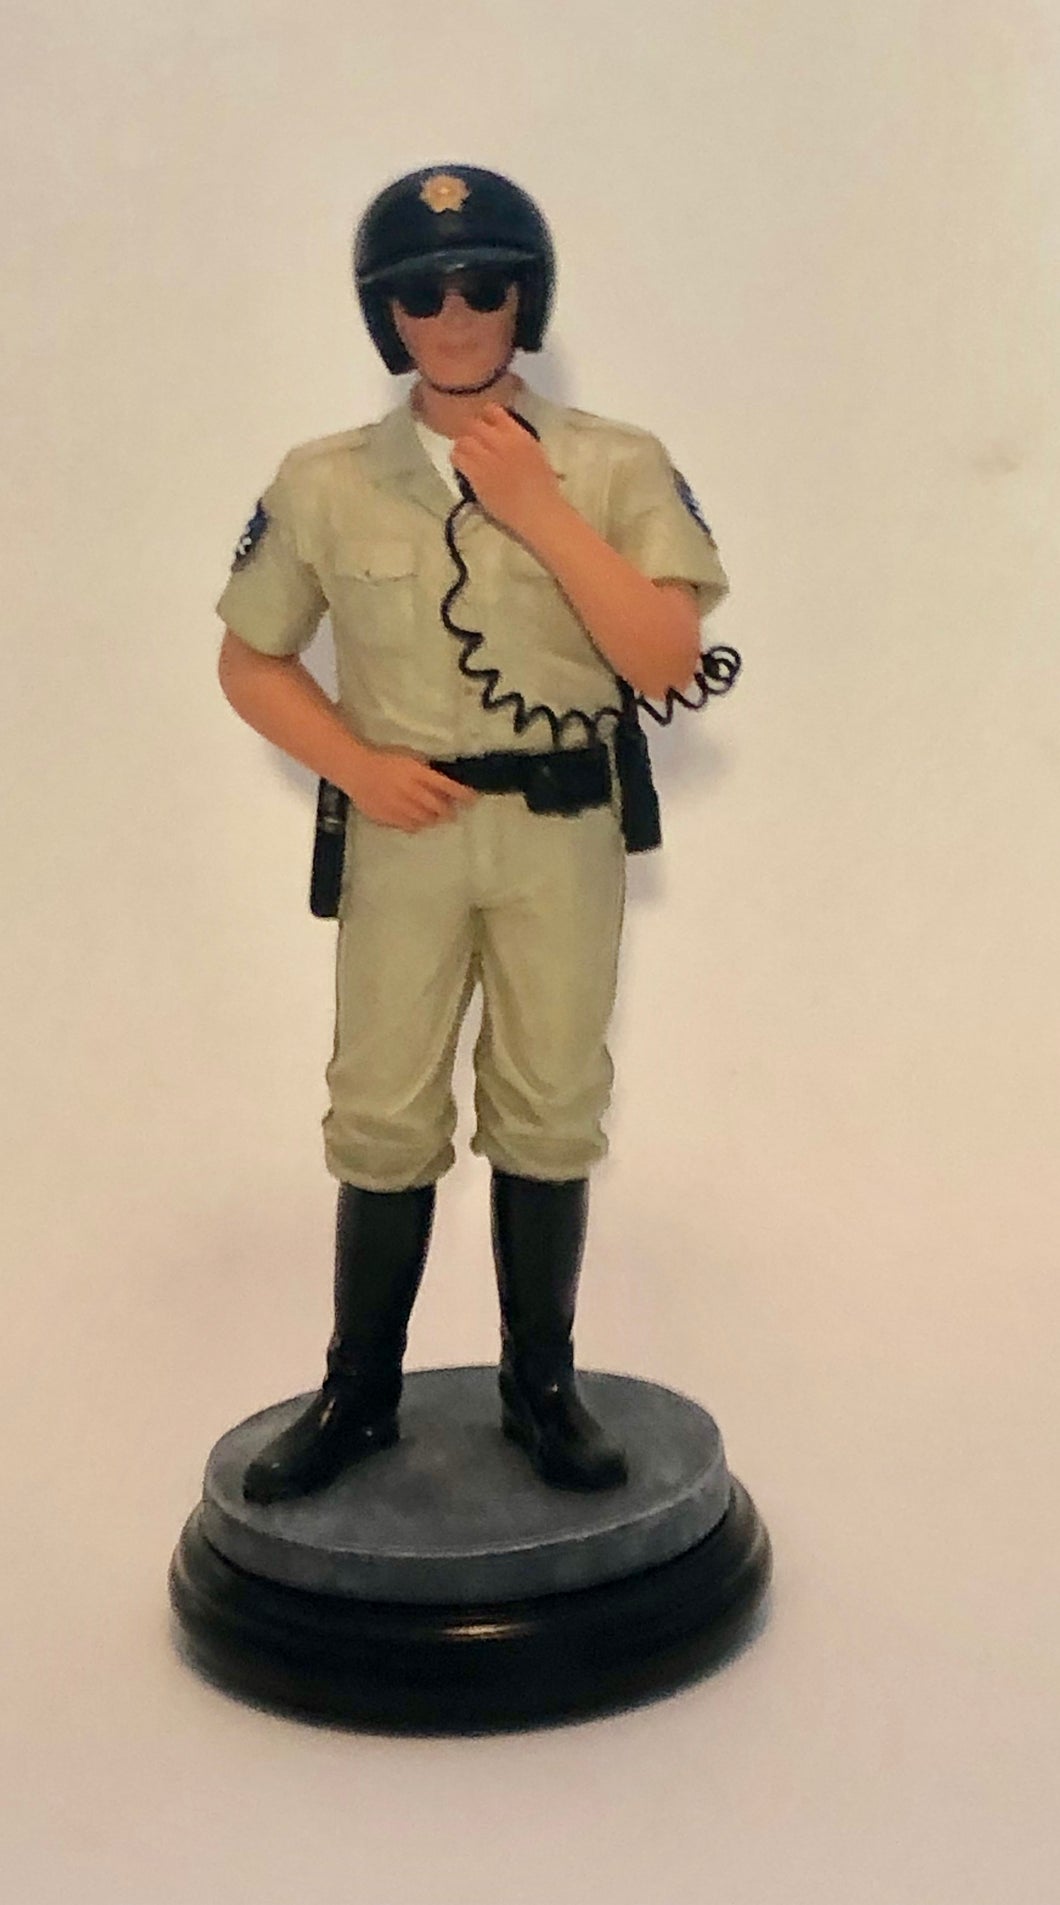 Standing Police Officer figurine on hand radio